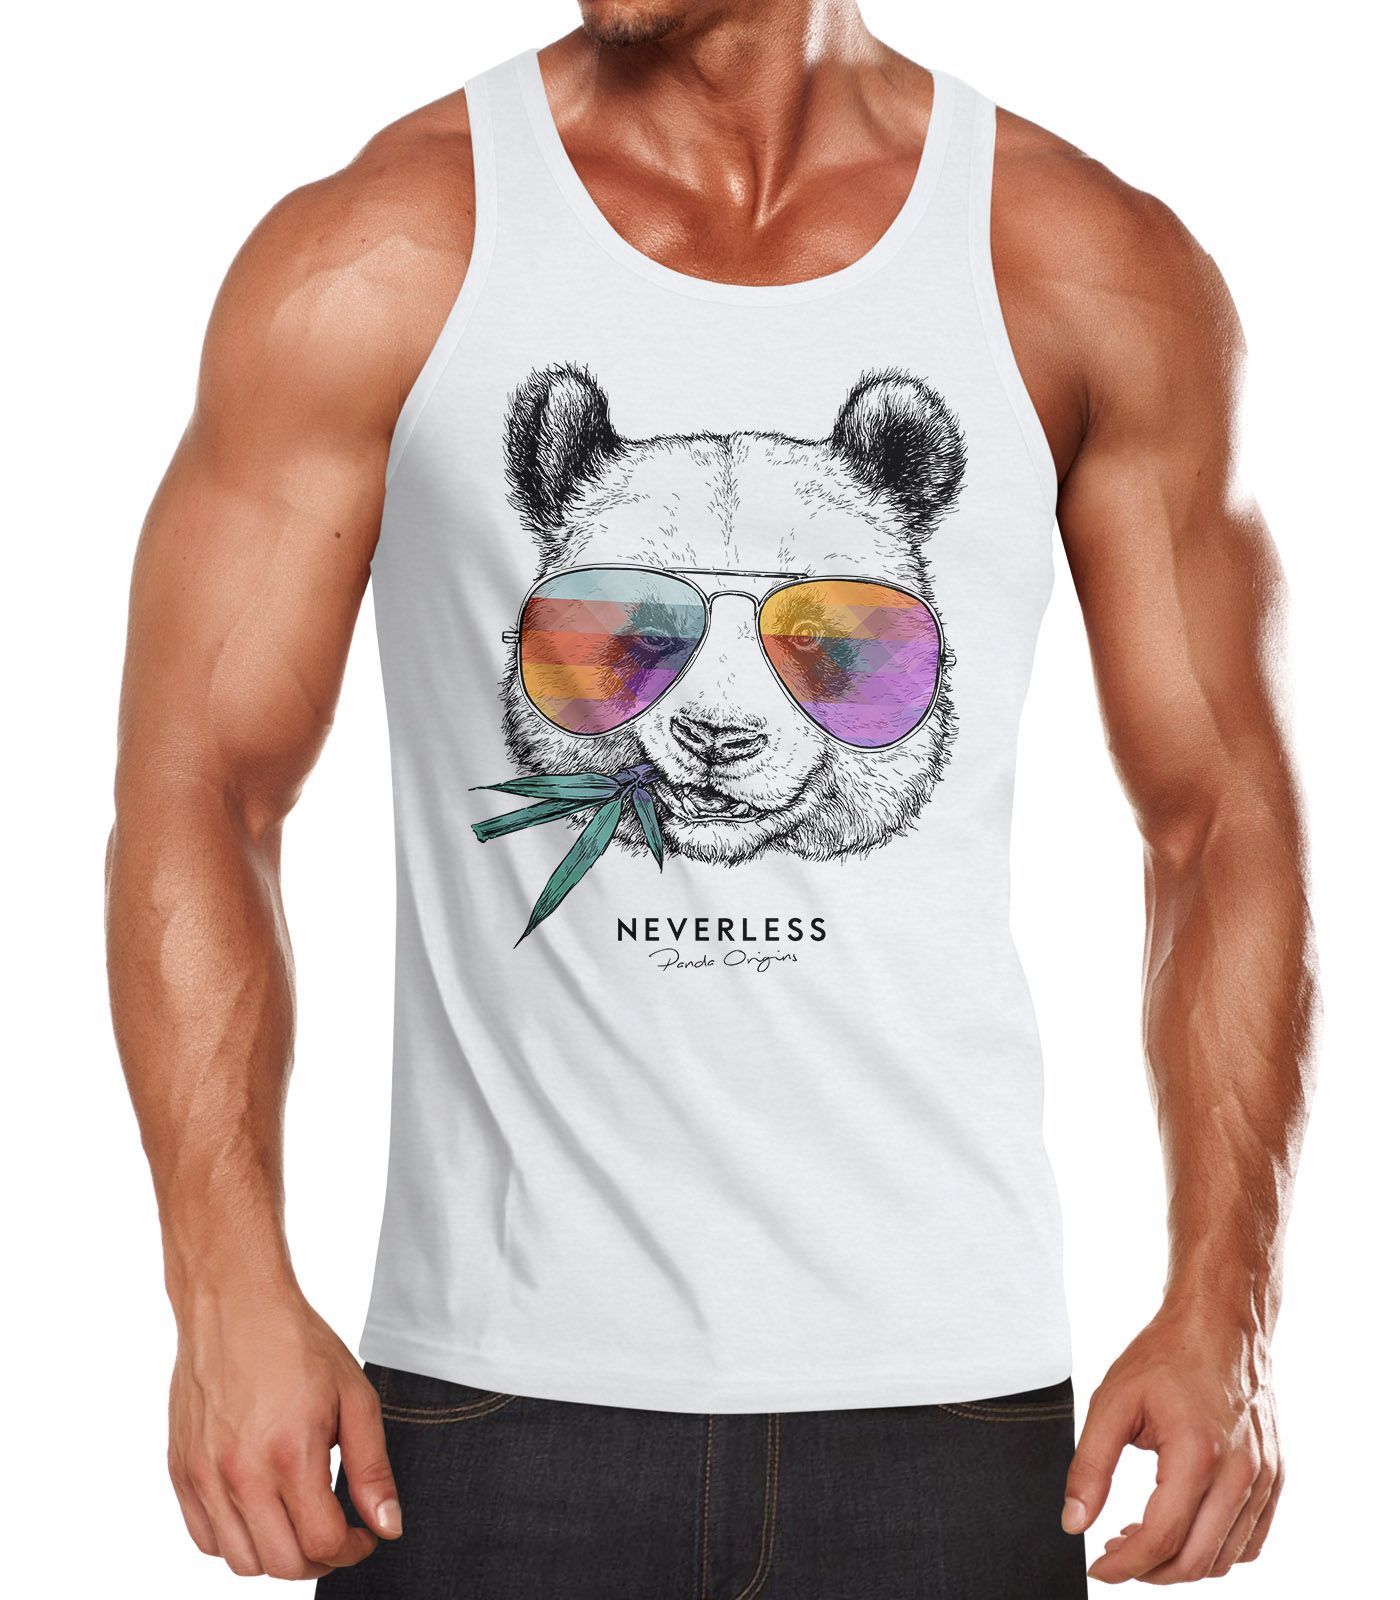 Herren Tank-Top Panda Bär Aufdruck Tiermotiv mit Sonnenbrille Fashion Streetstyle Muskelshirt Muscle Shirt Neverless®